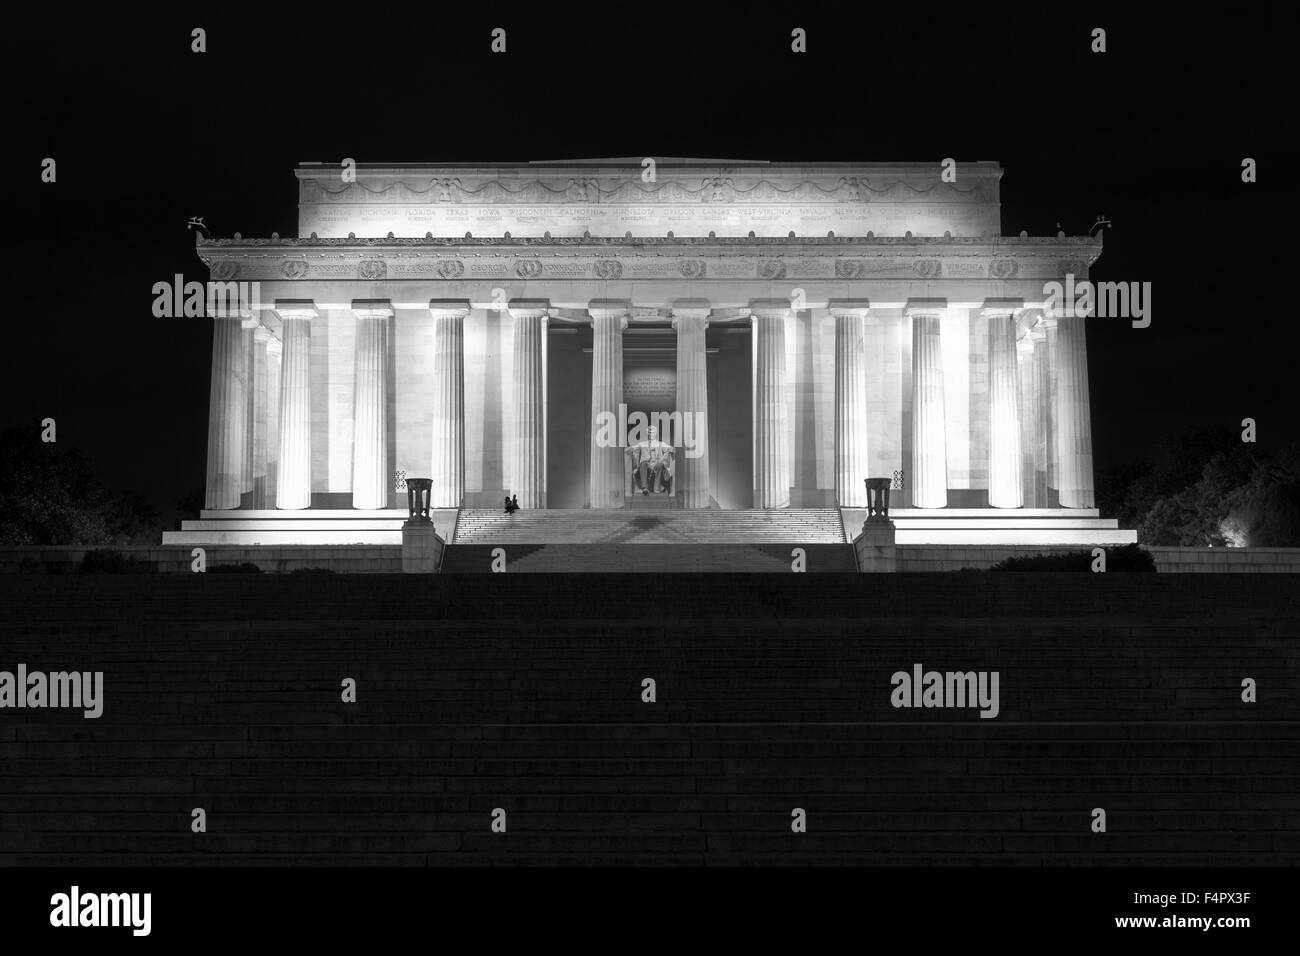 Abraham Lincoln monument in Washington, DC Stock Photo